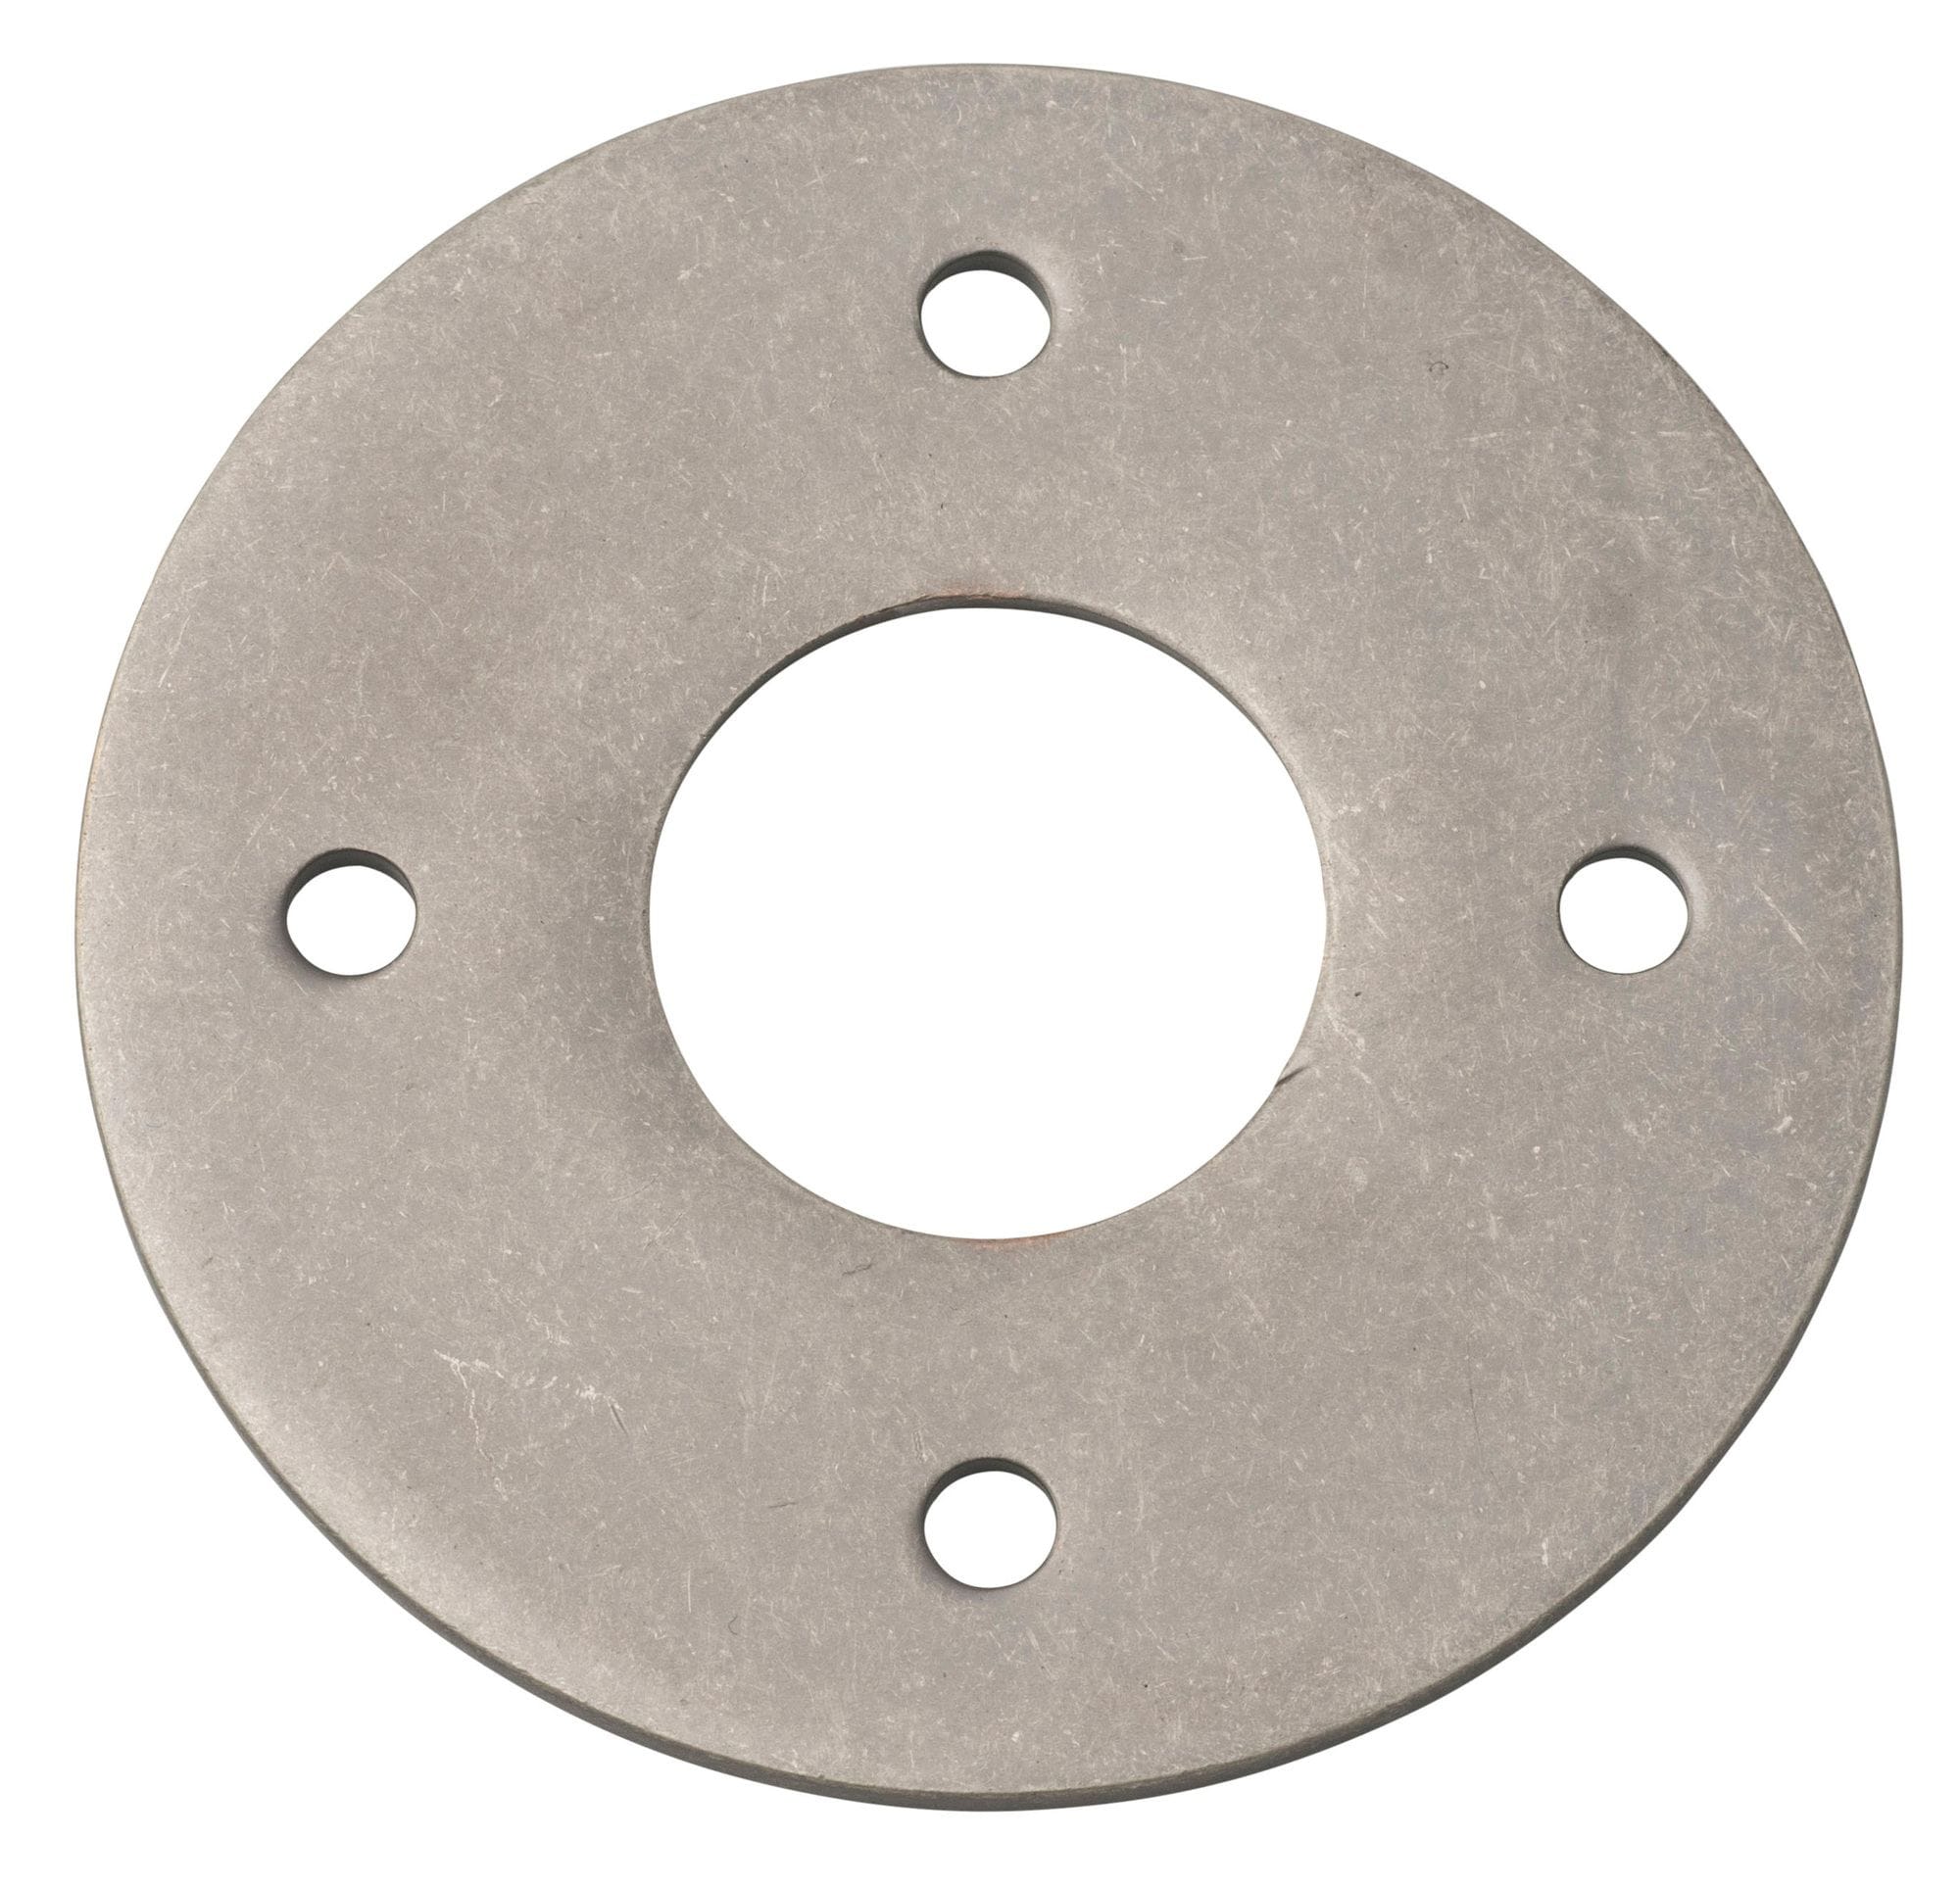 Adaptor Plate (Pair) Round Distressed Nickel